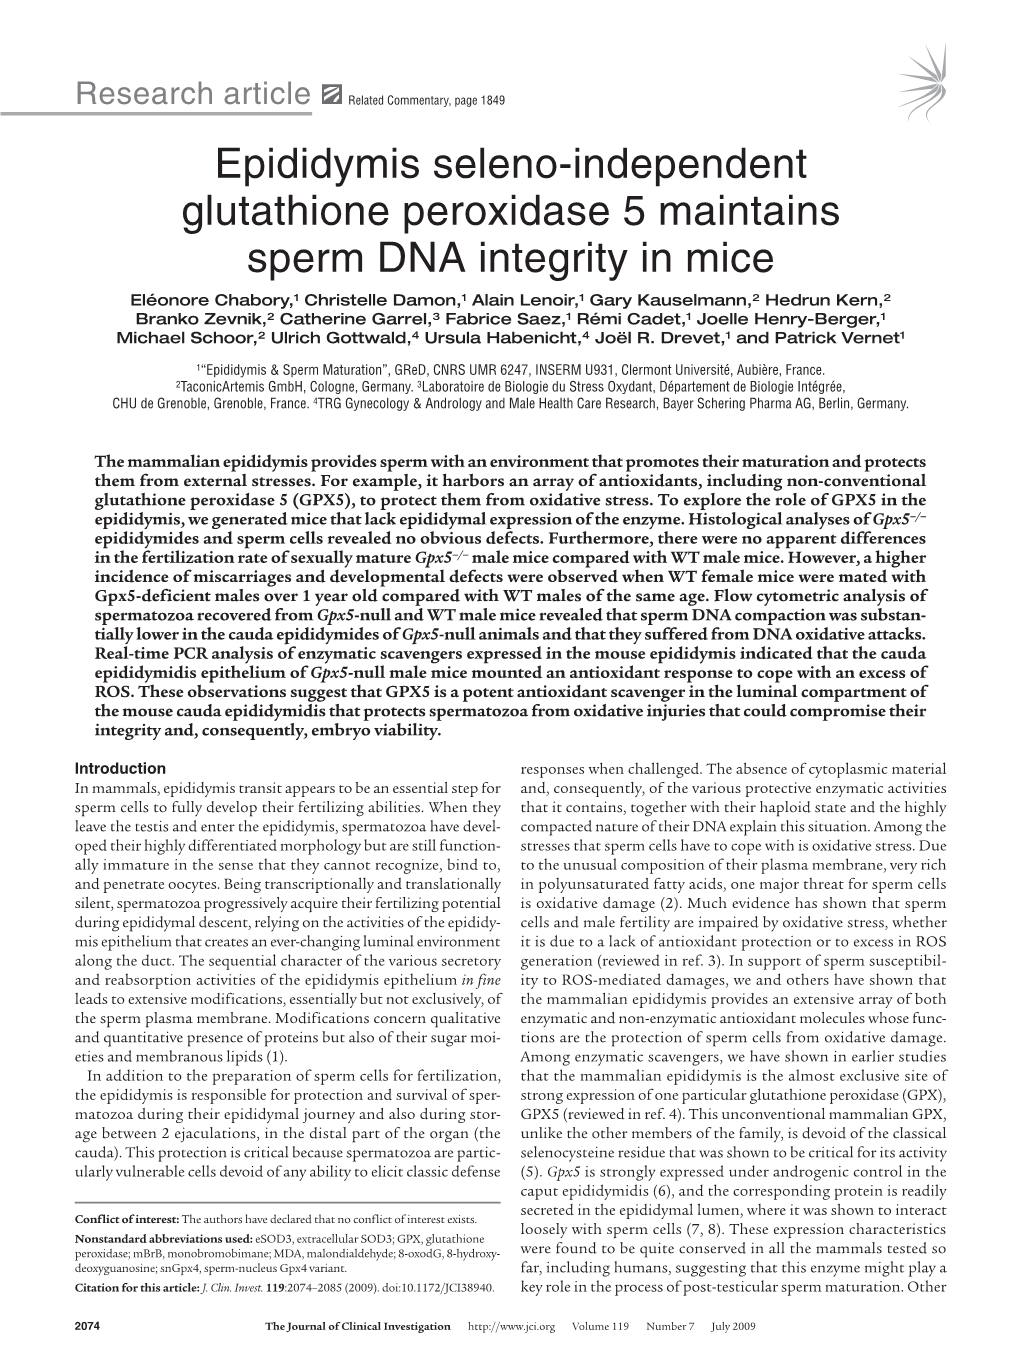 Epididymis Seleno-Independent Glutathione Peroxidase 5 Maintains